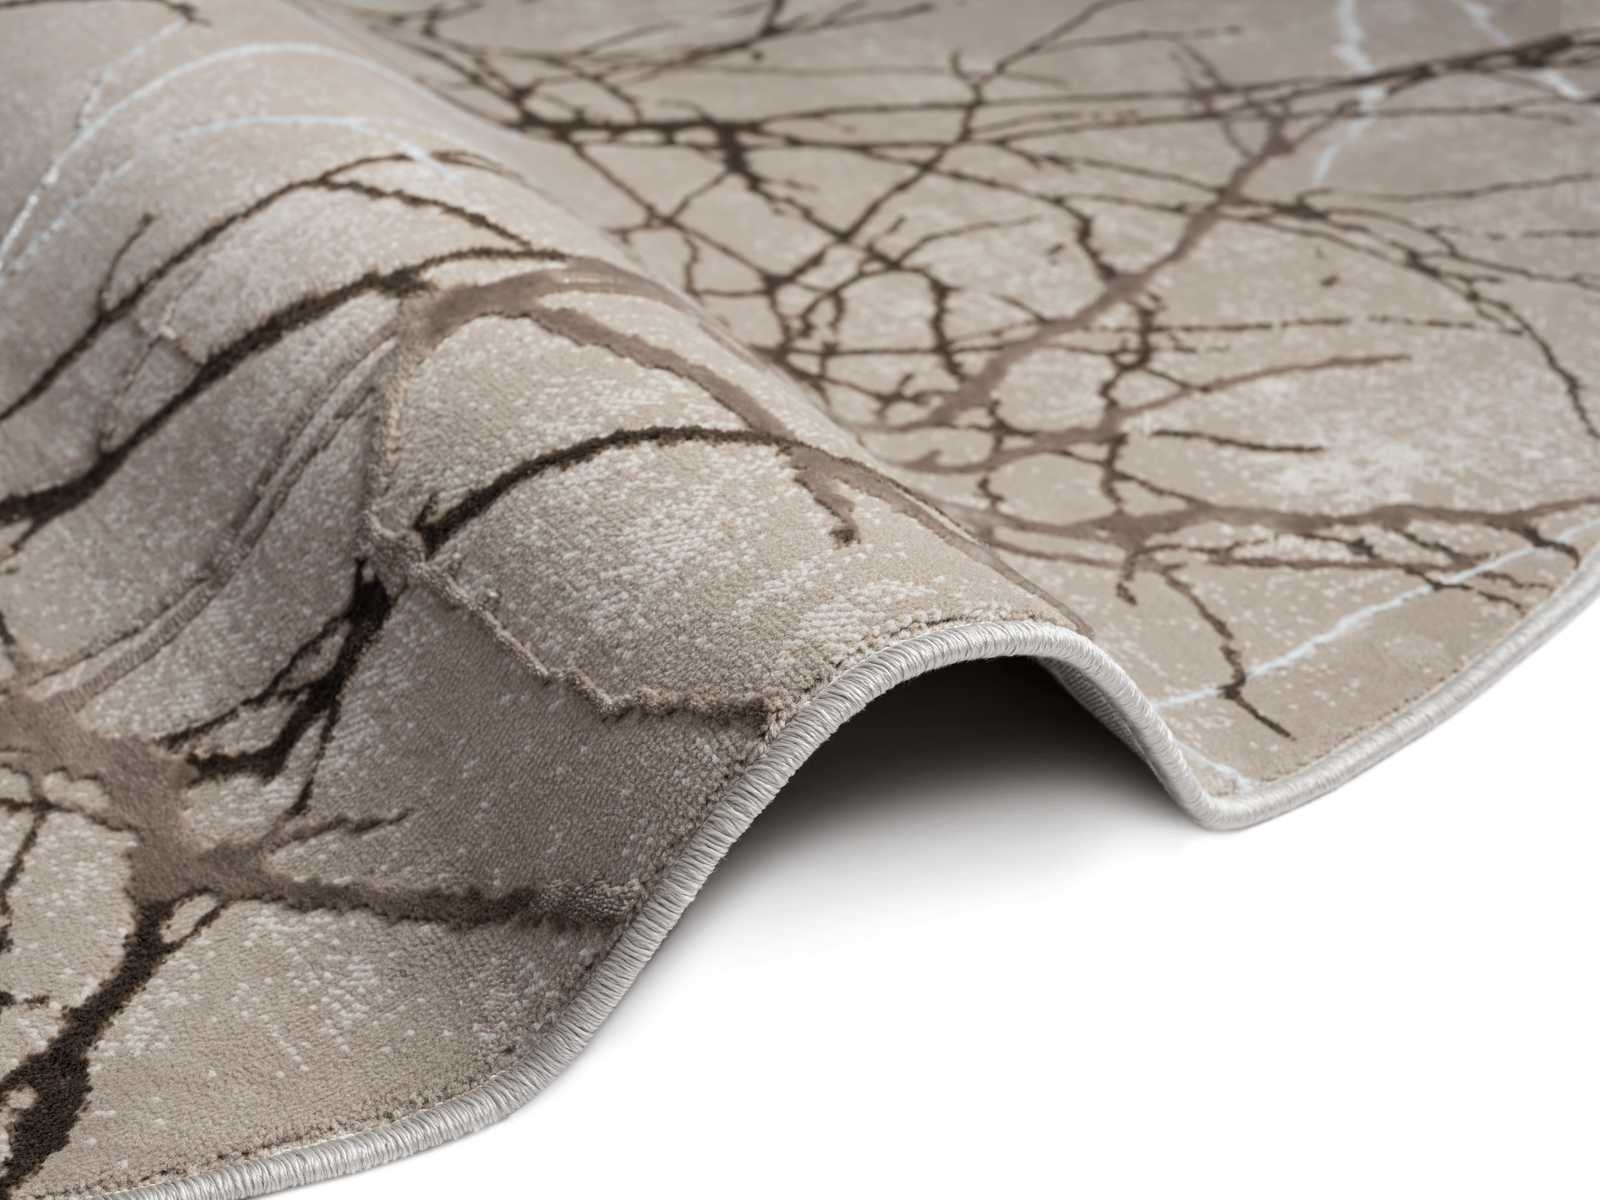             Pile carpet in soft beige - 230 x 160 cm
        